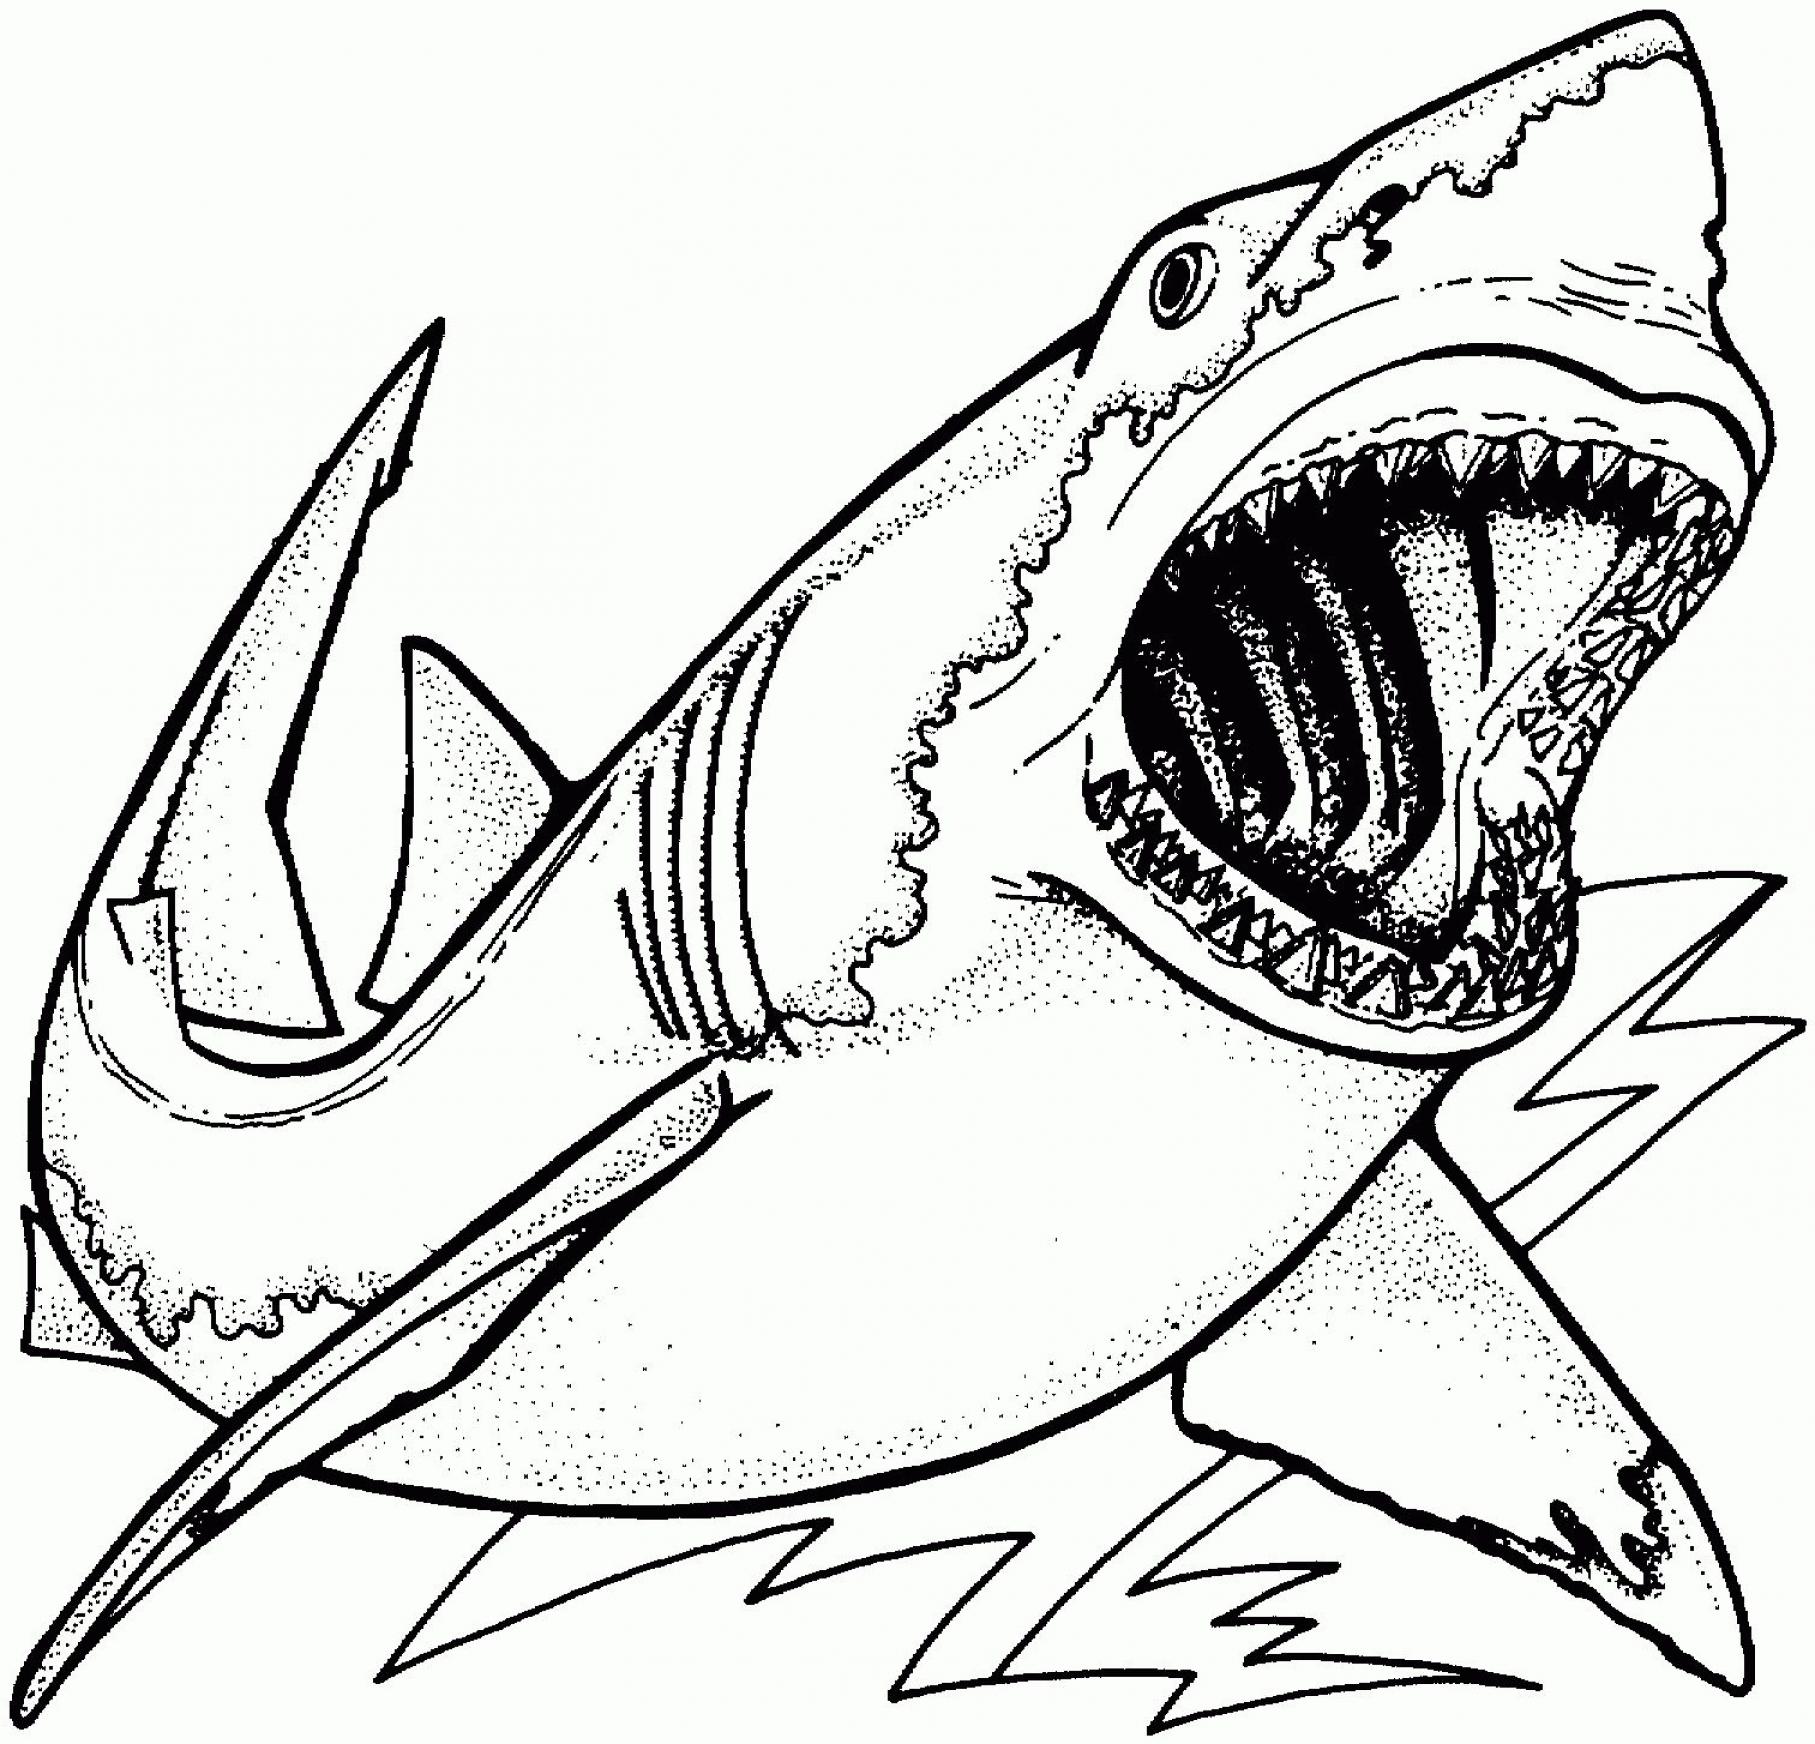 Shark Coloring Pages PDF Printable - SheetalColor.com